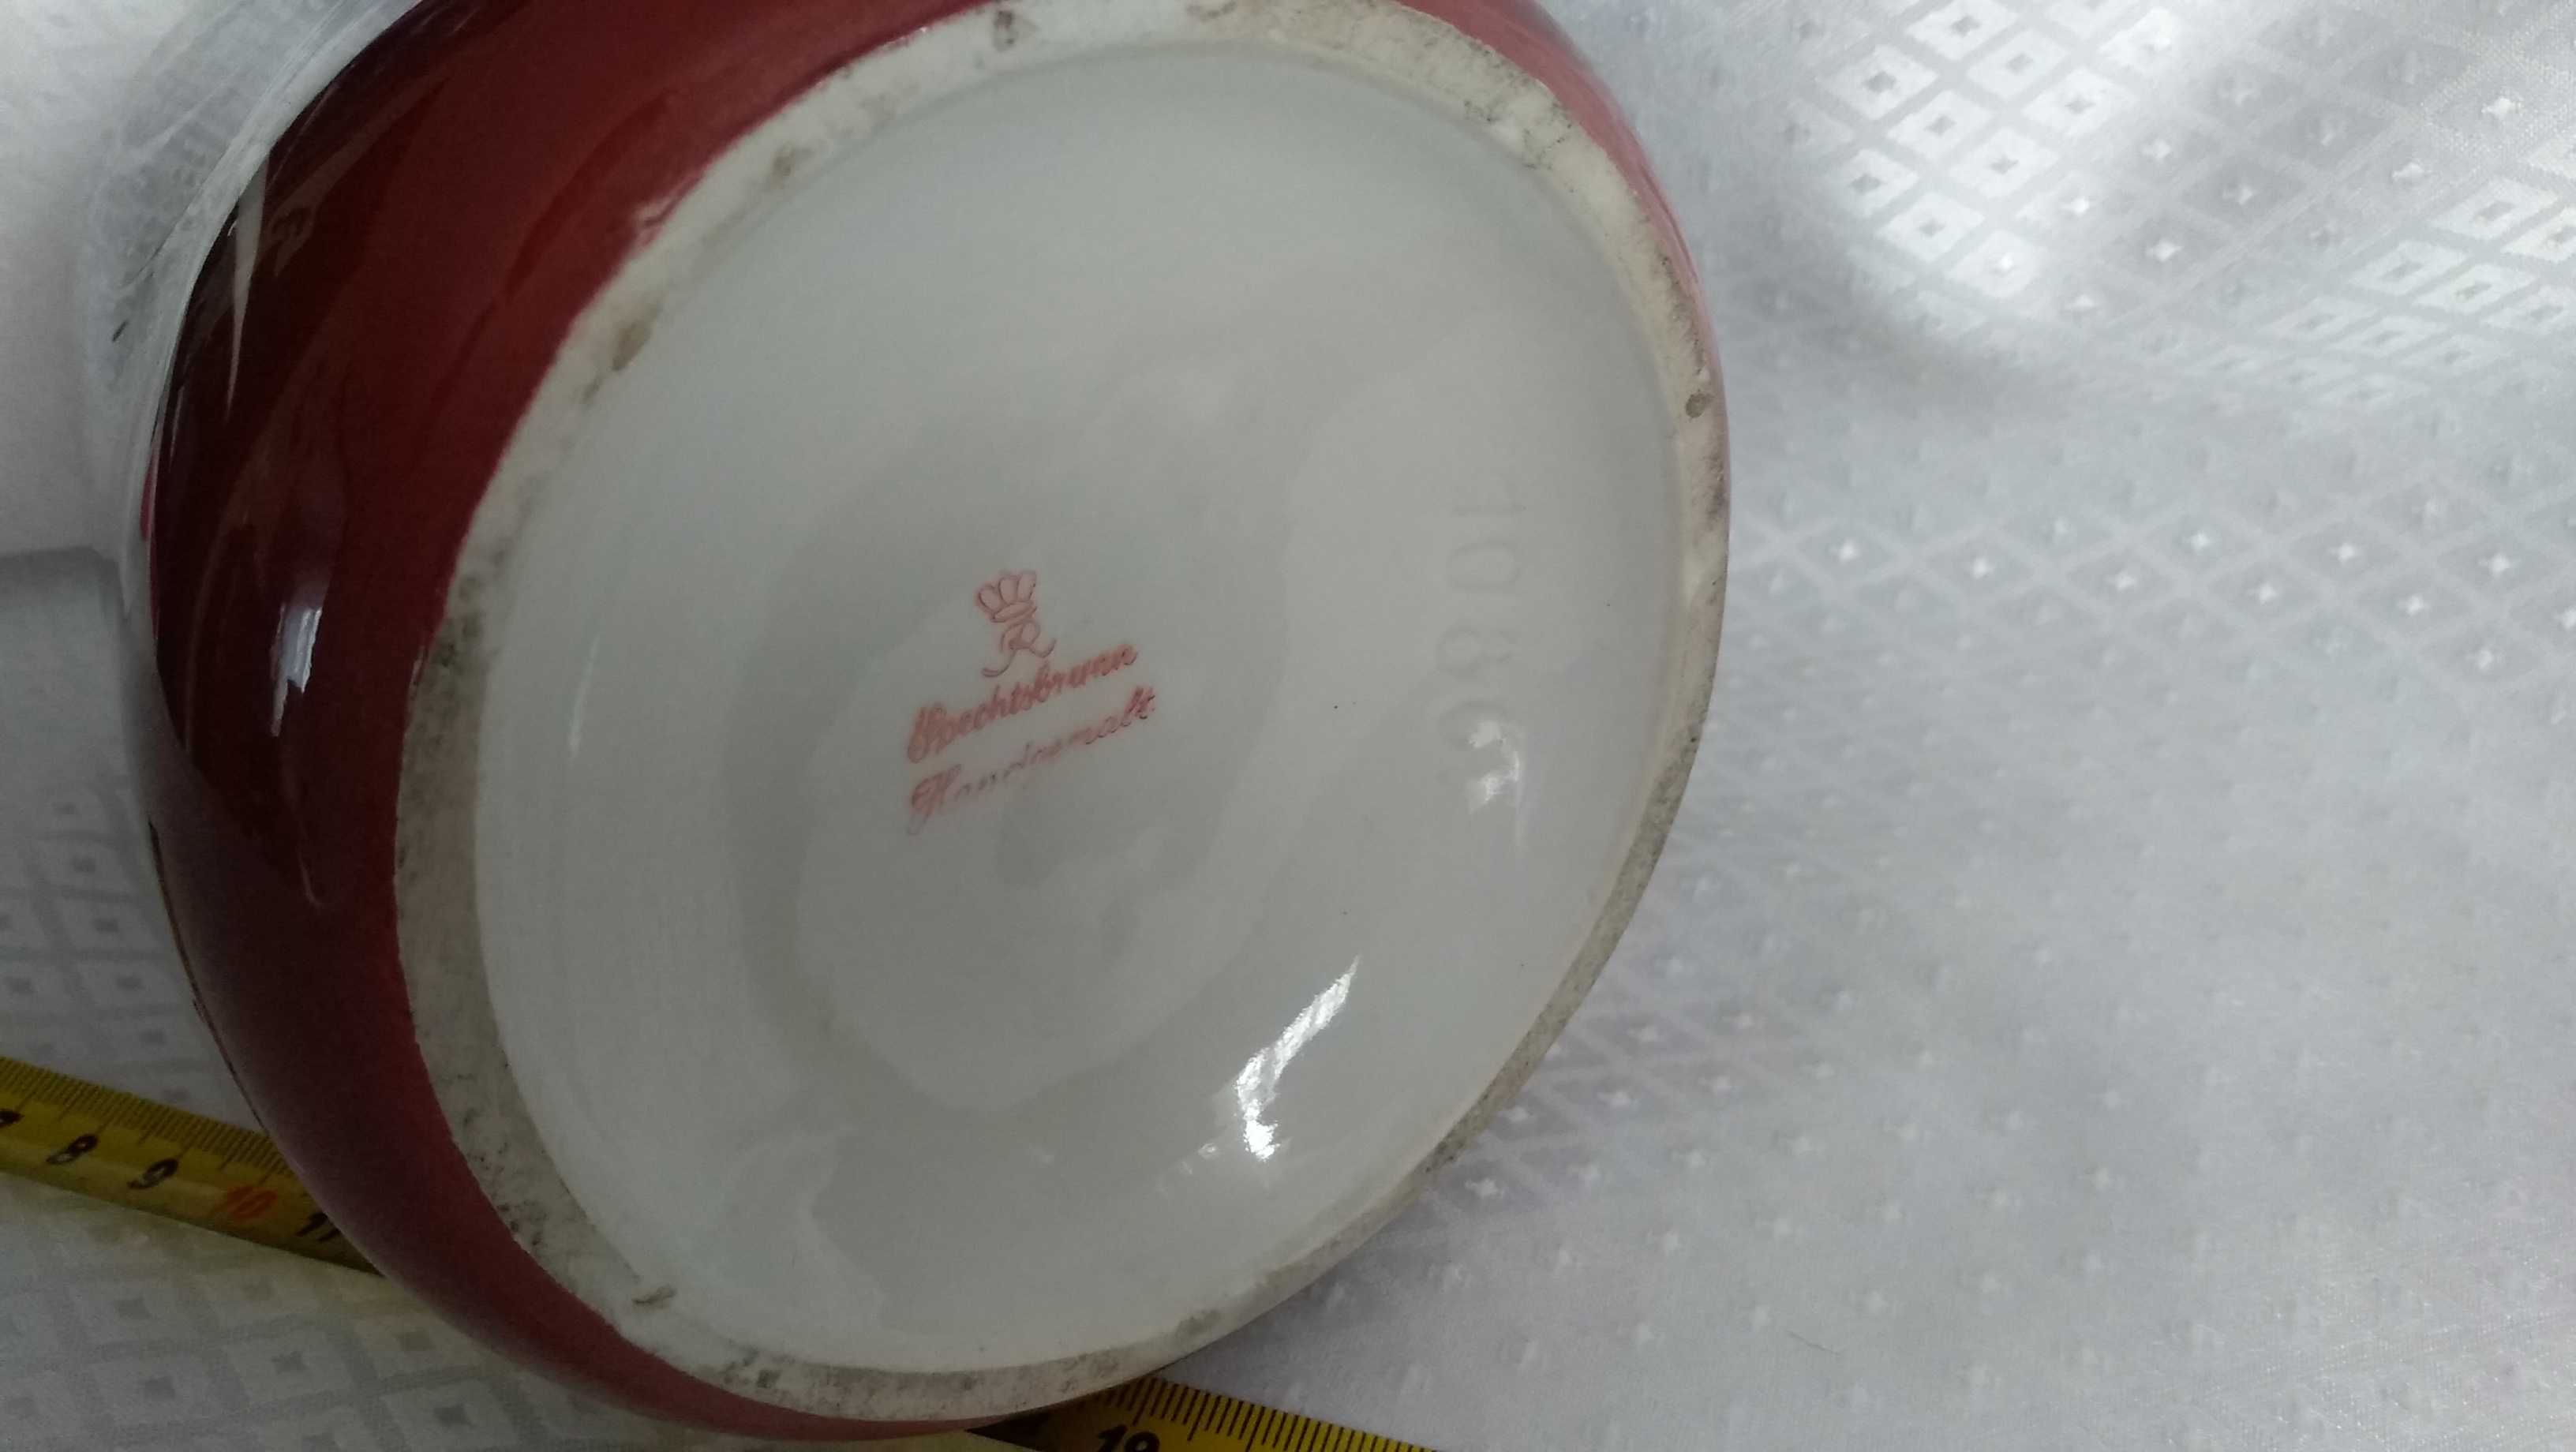 Prl wazon niemiecka porcelana spechtsbrunn